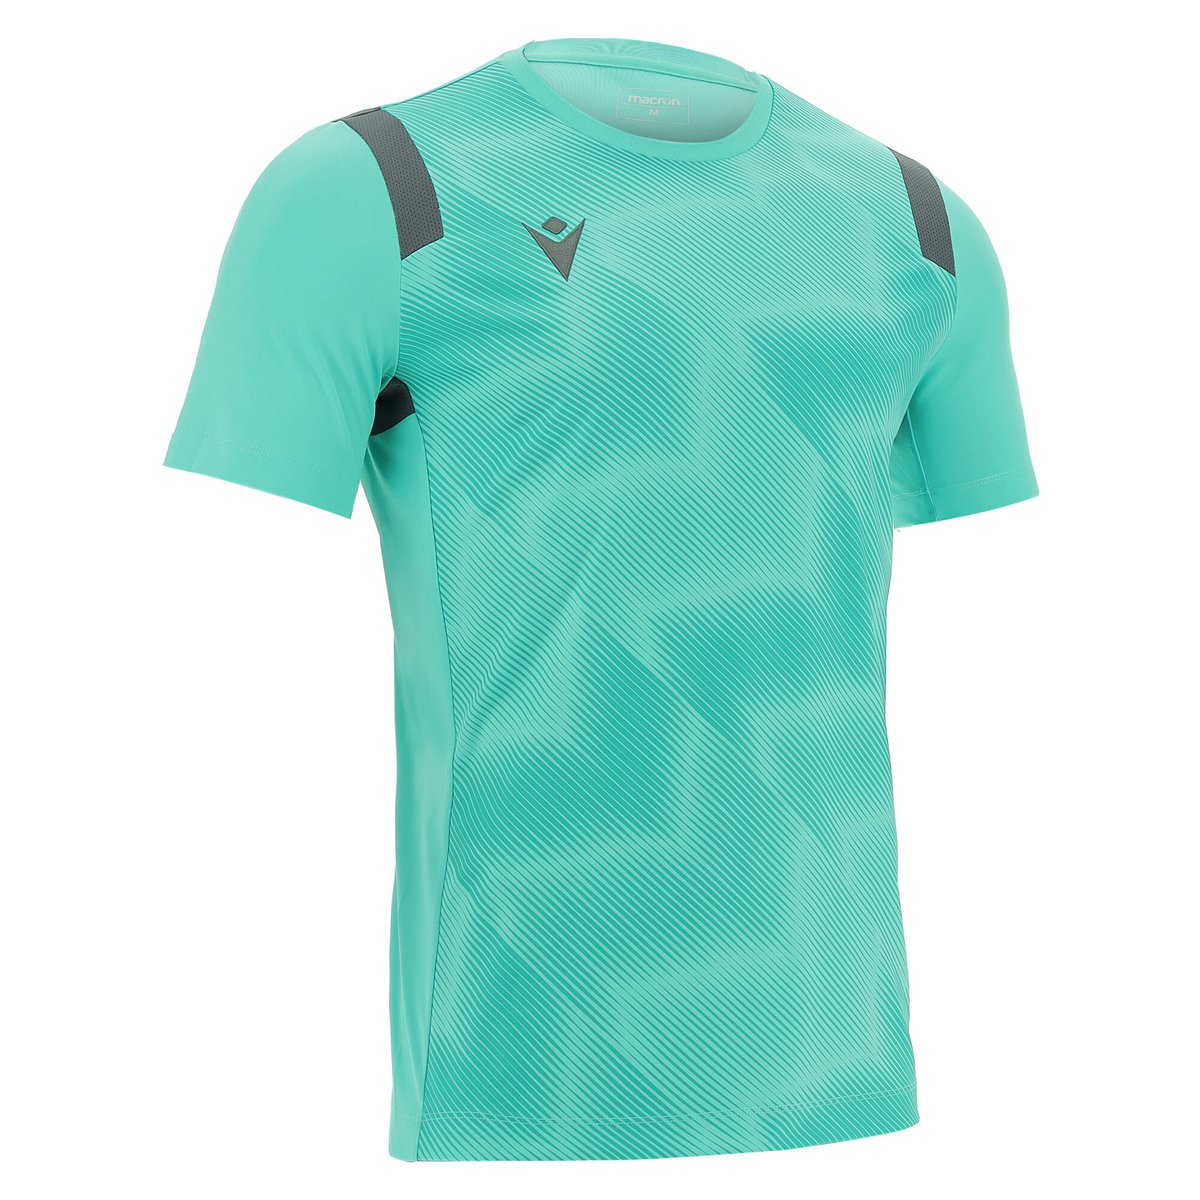 Macron Rodders Shirt - Turquoise/Anthracite